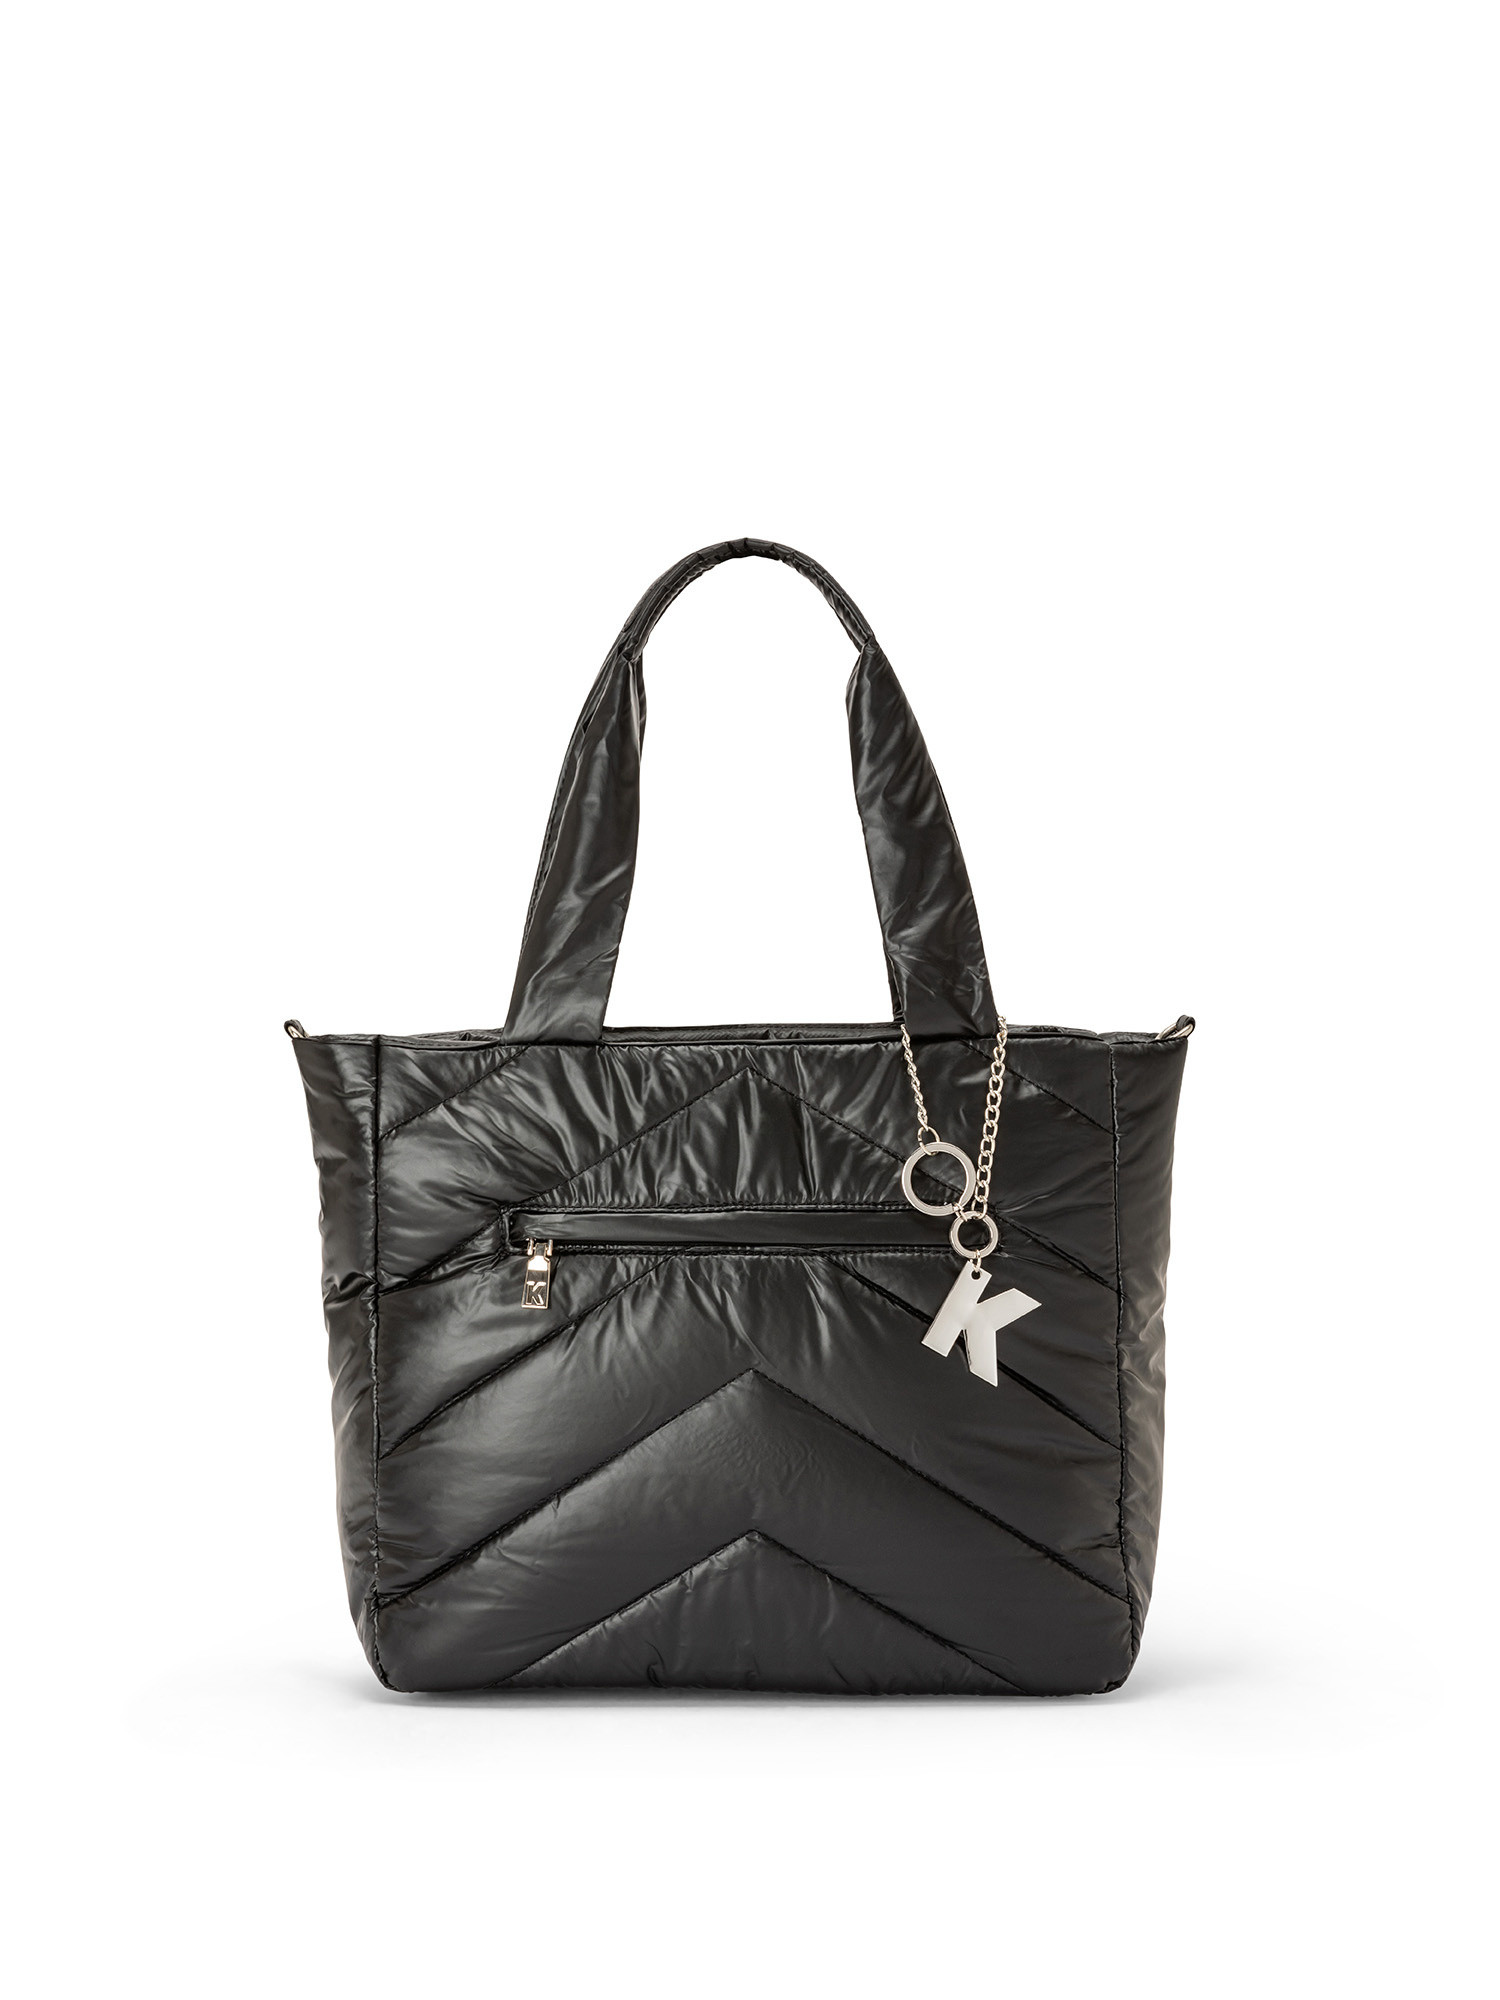 Koan - Nylon shopping bag, Black, large image number 0